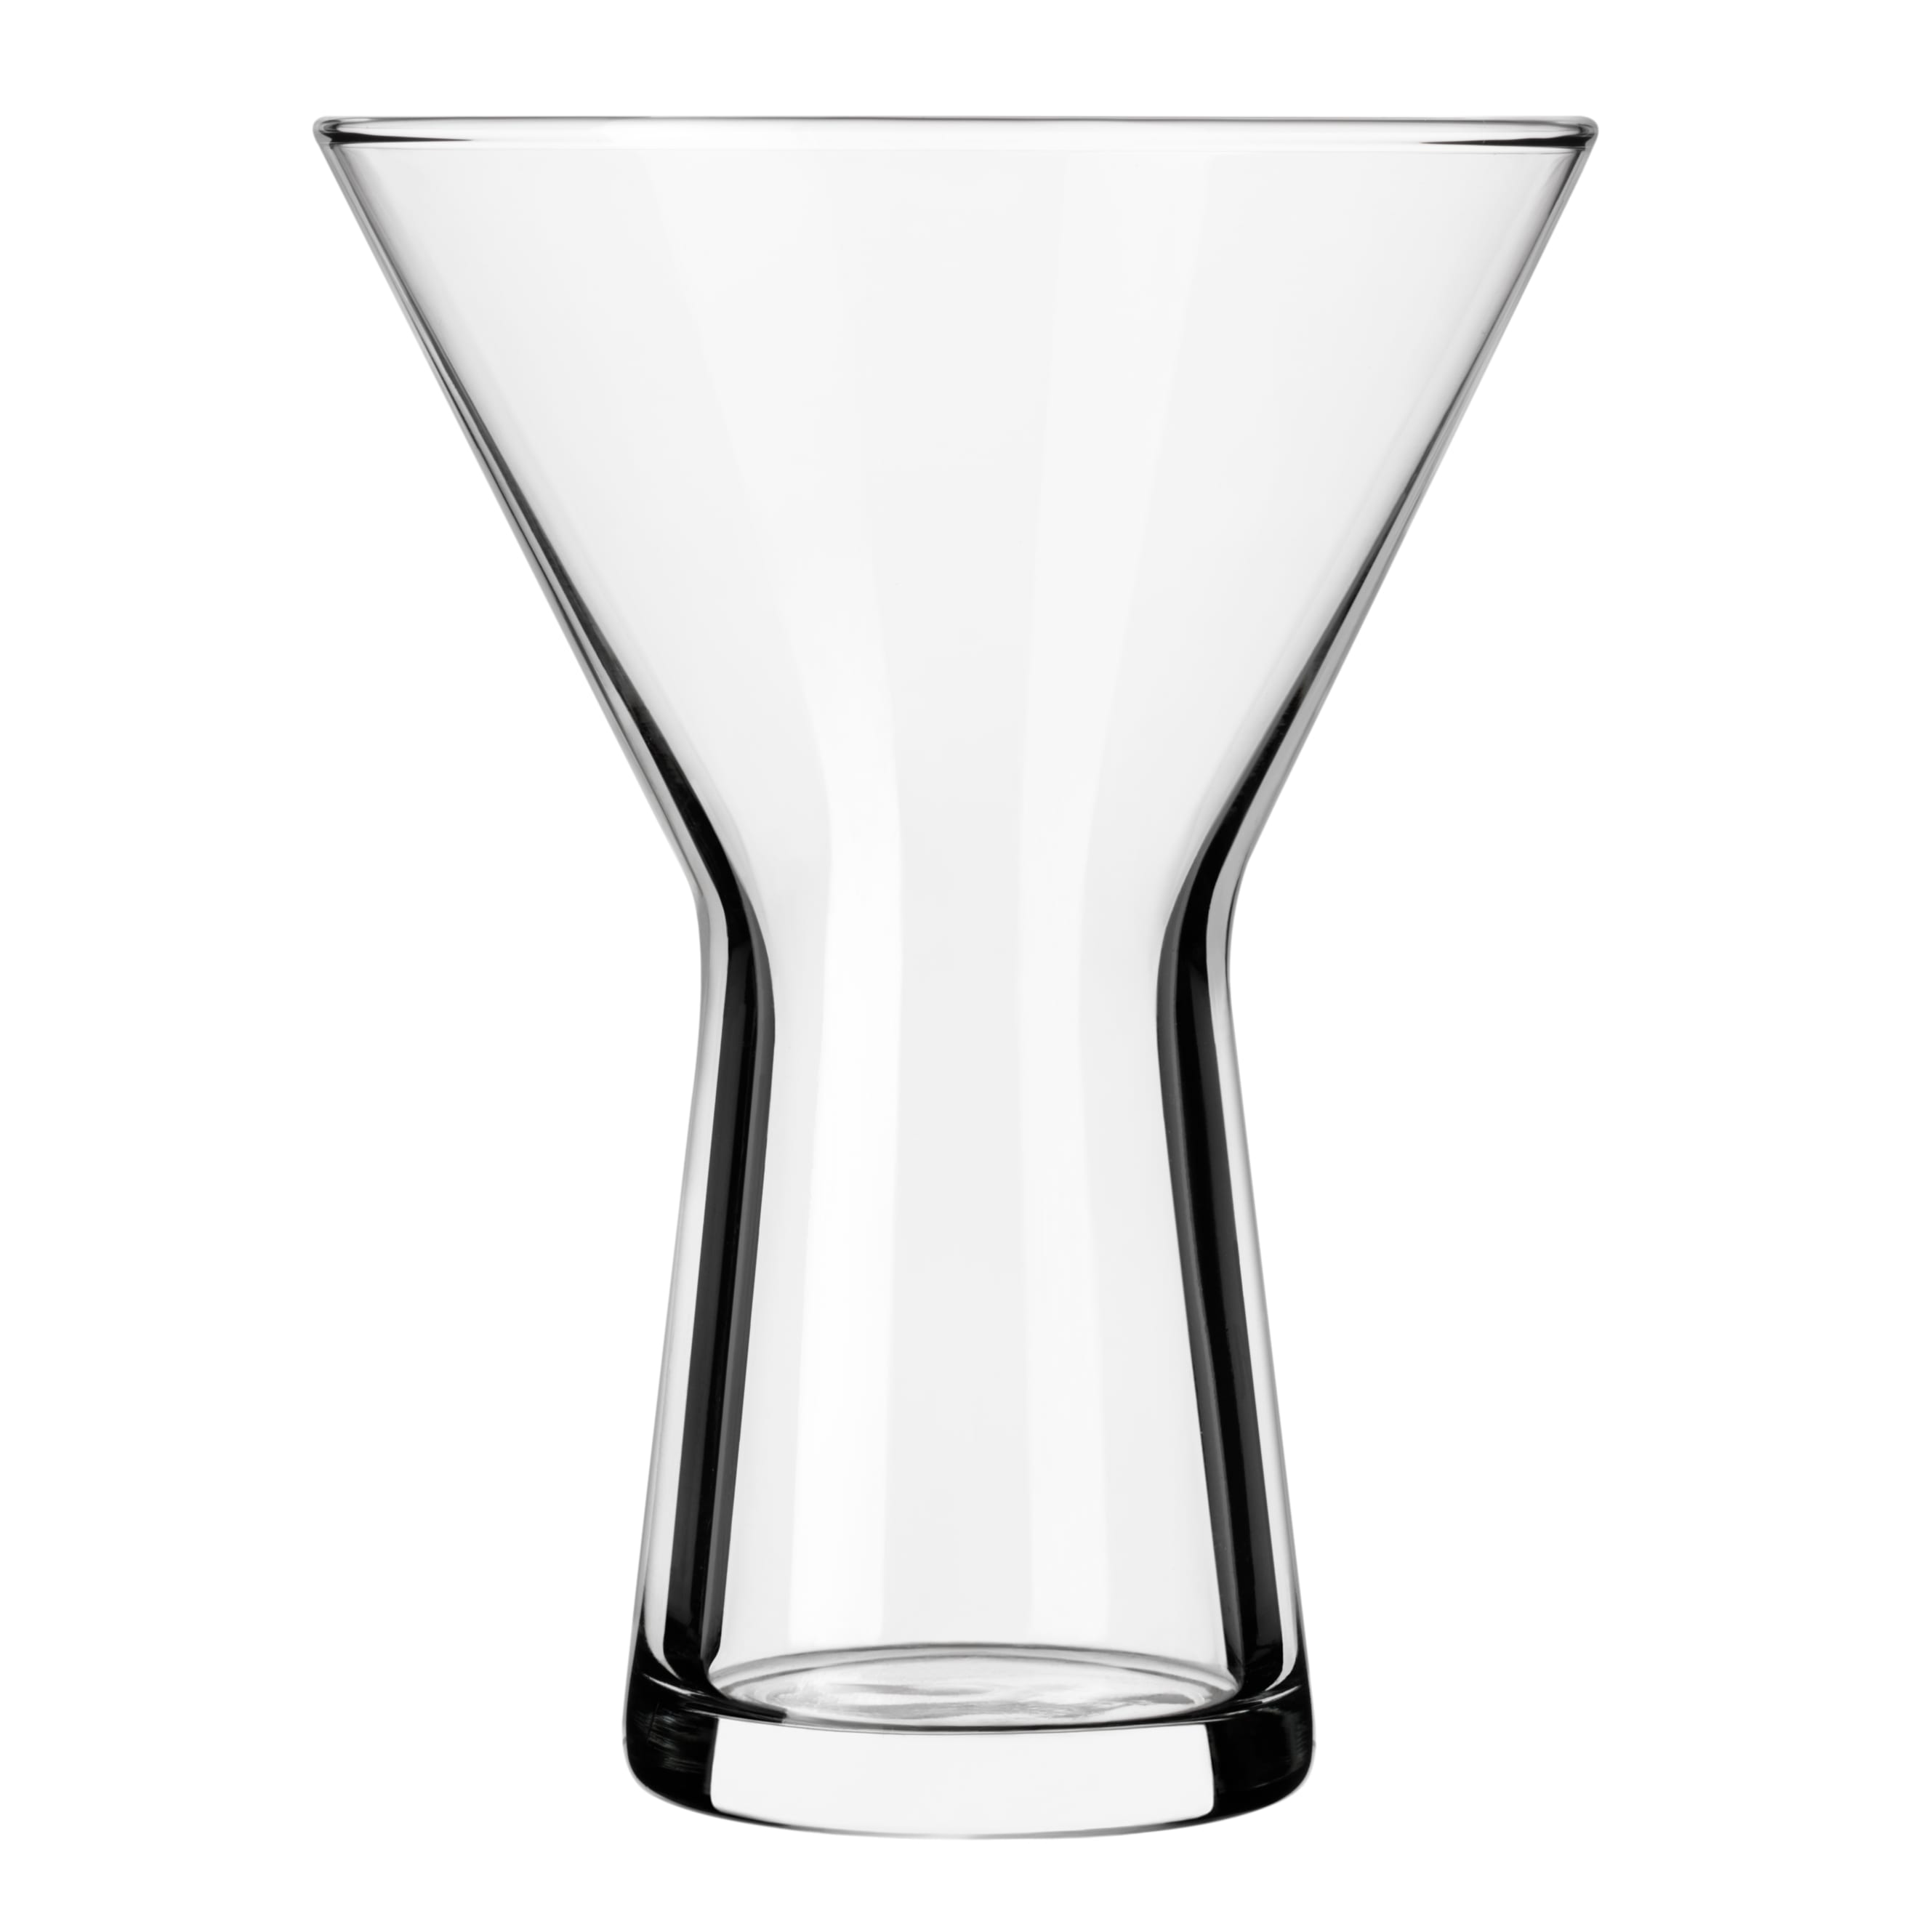 Libbey 1103 Symbio Martini Glass, 12 Ounce, Clear